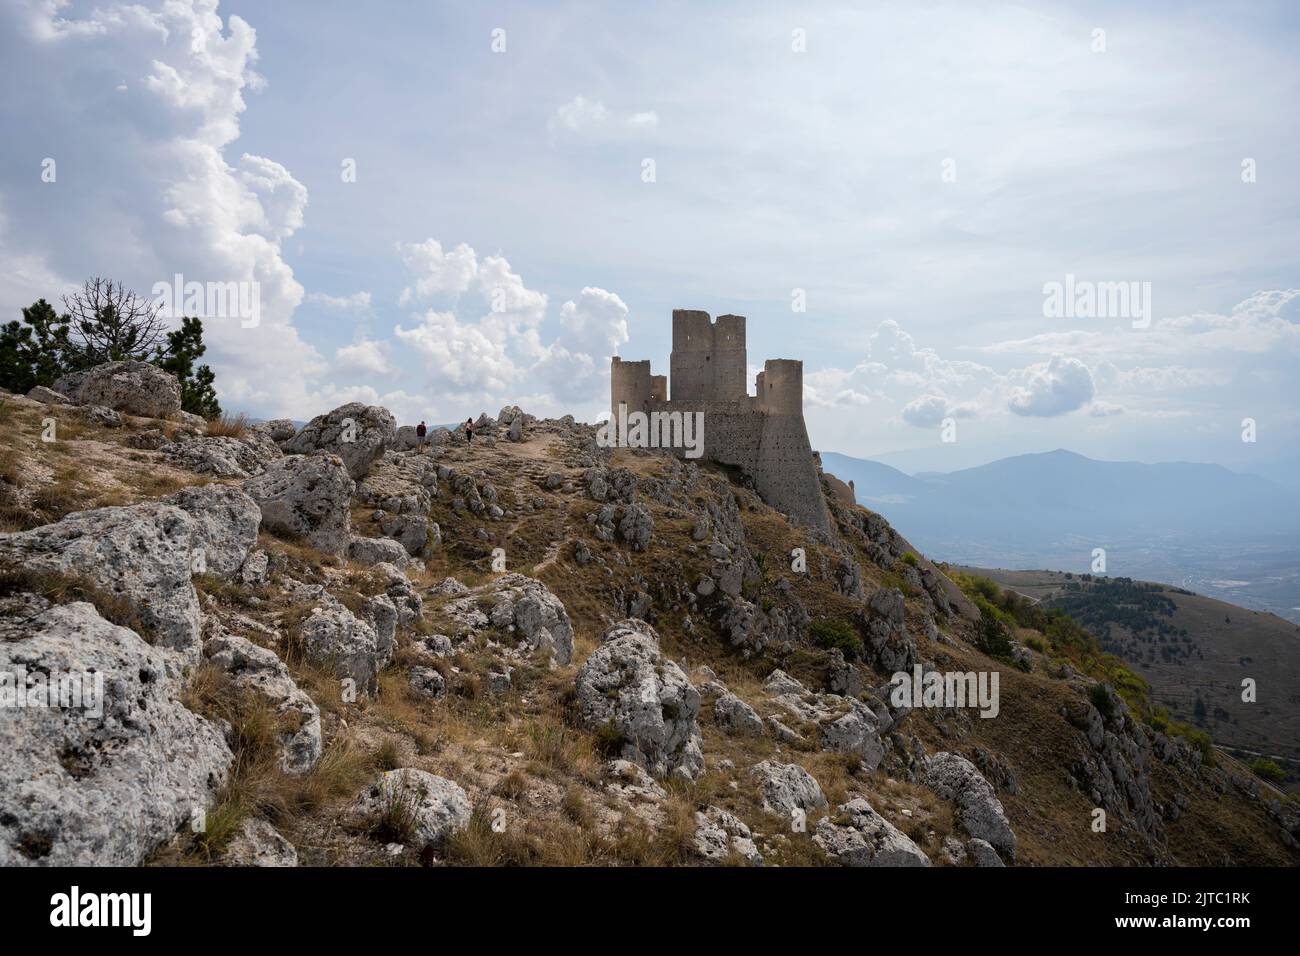 Castle ruins on mountain top at Rocca Calascio, italian travel destination, landmark in the Gran Sasso National Park, Abruzzo, Italy. Stock Photo